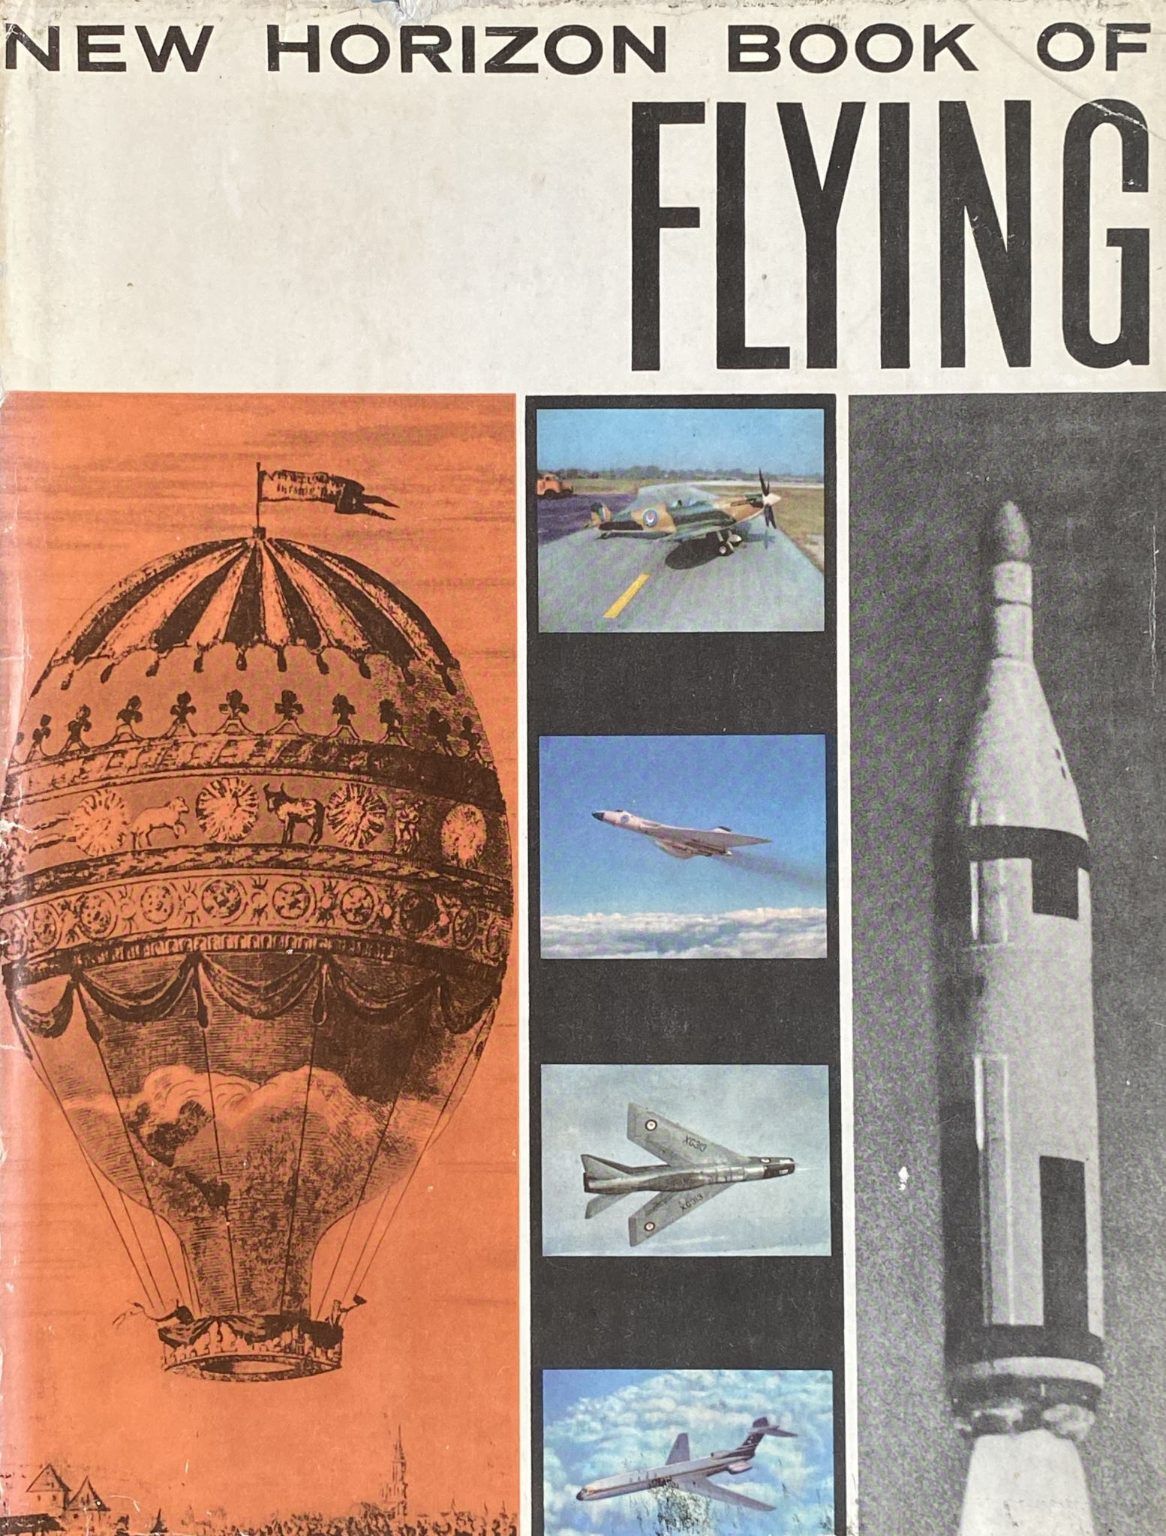 NEW HORIZON BOOK OF FLYING